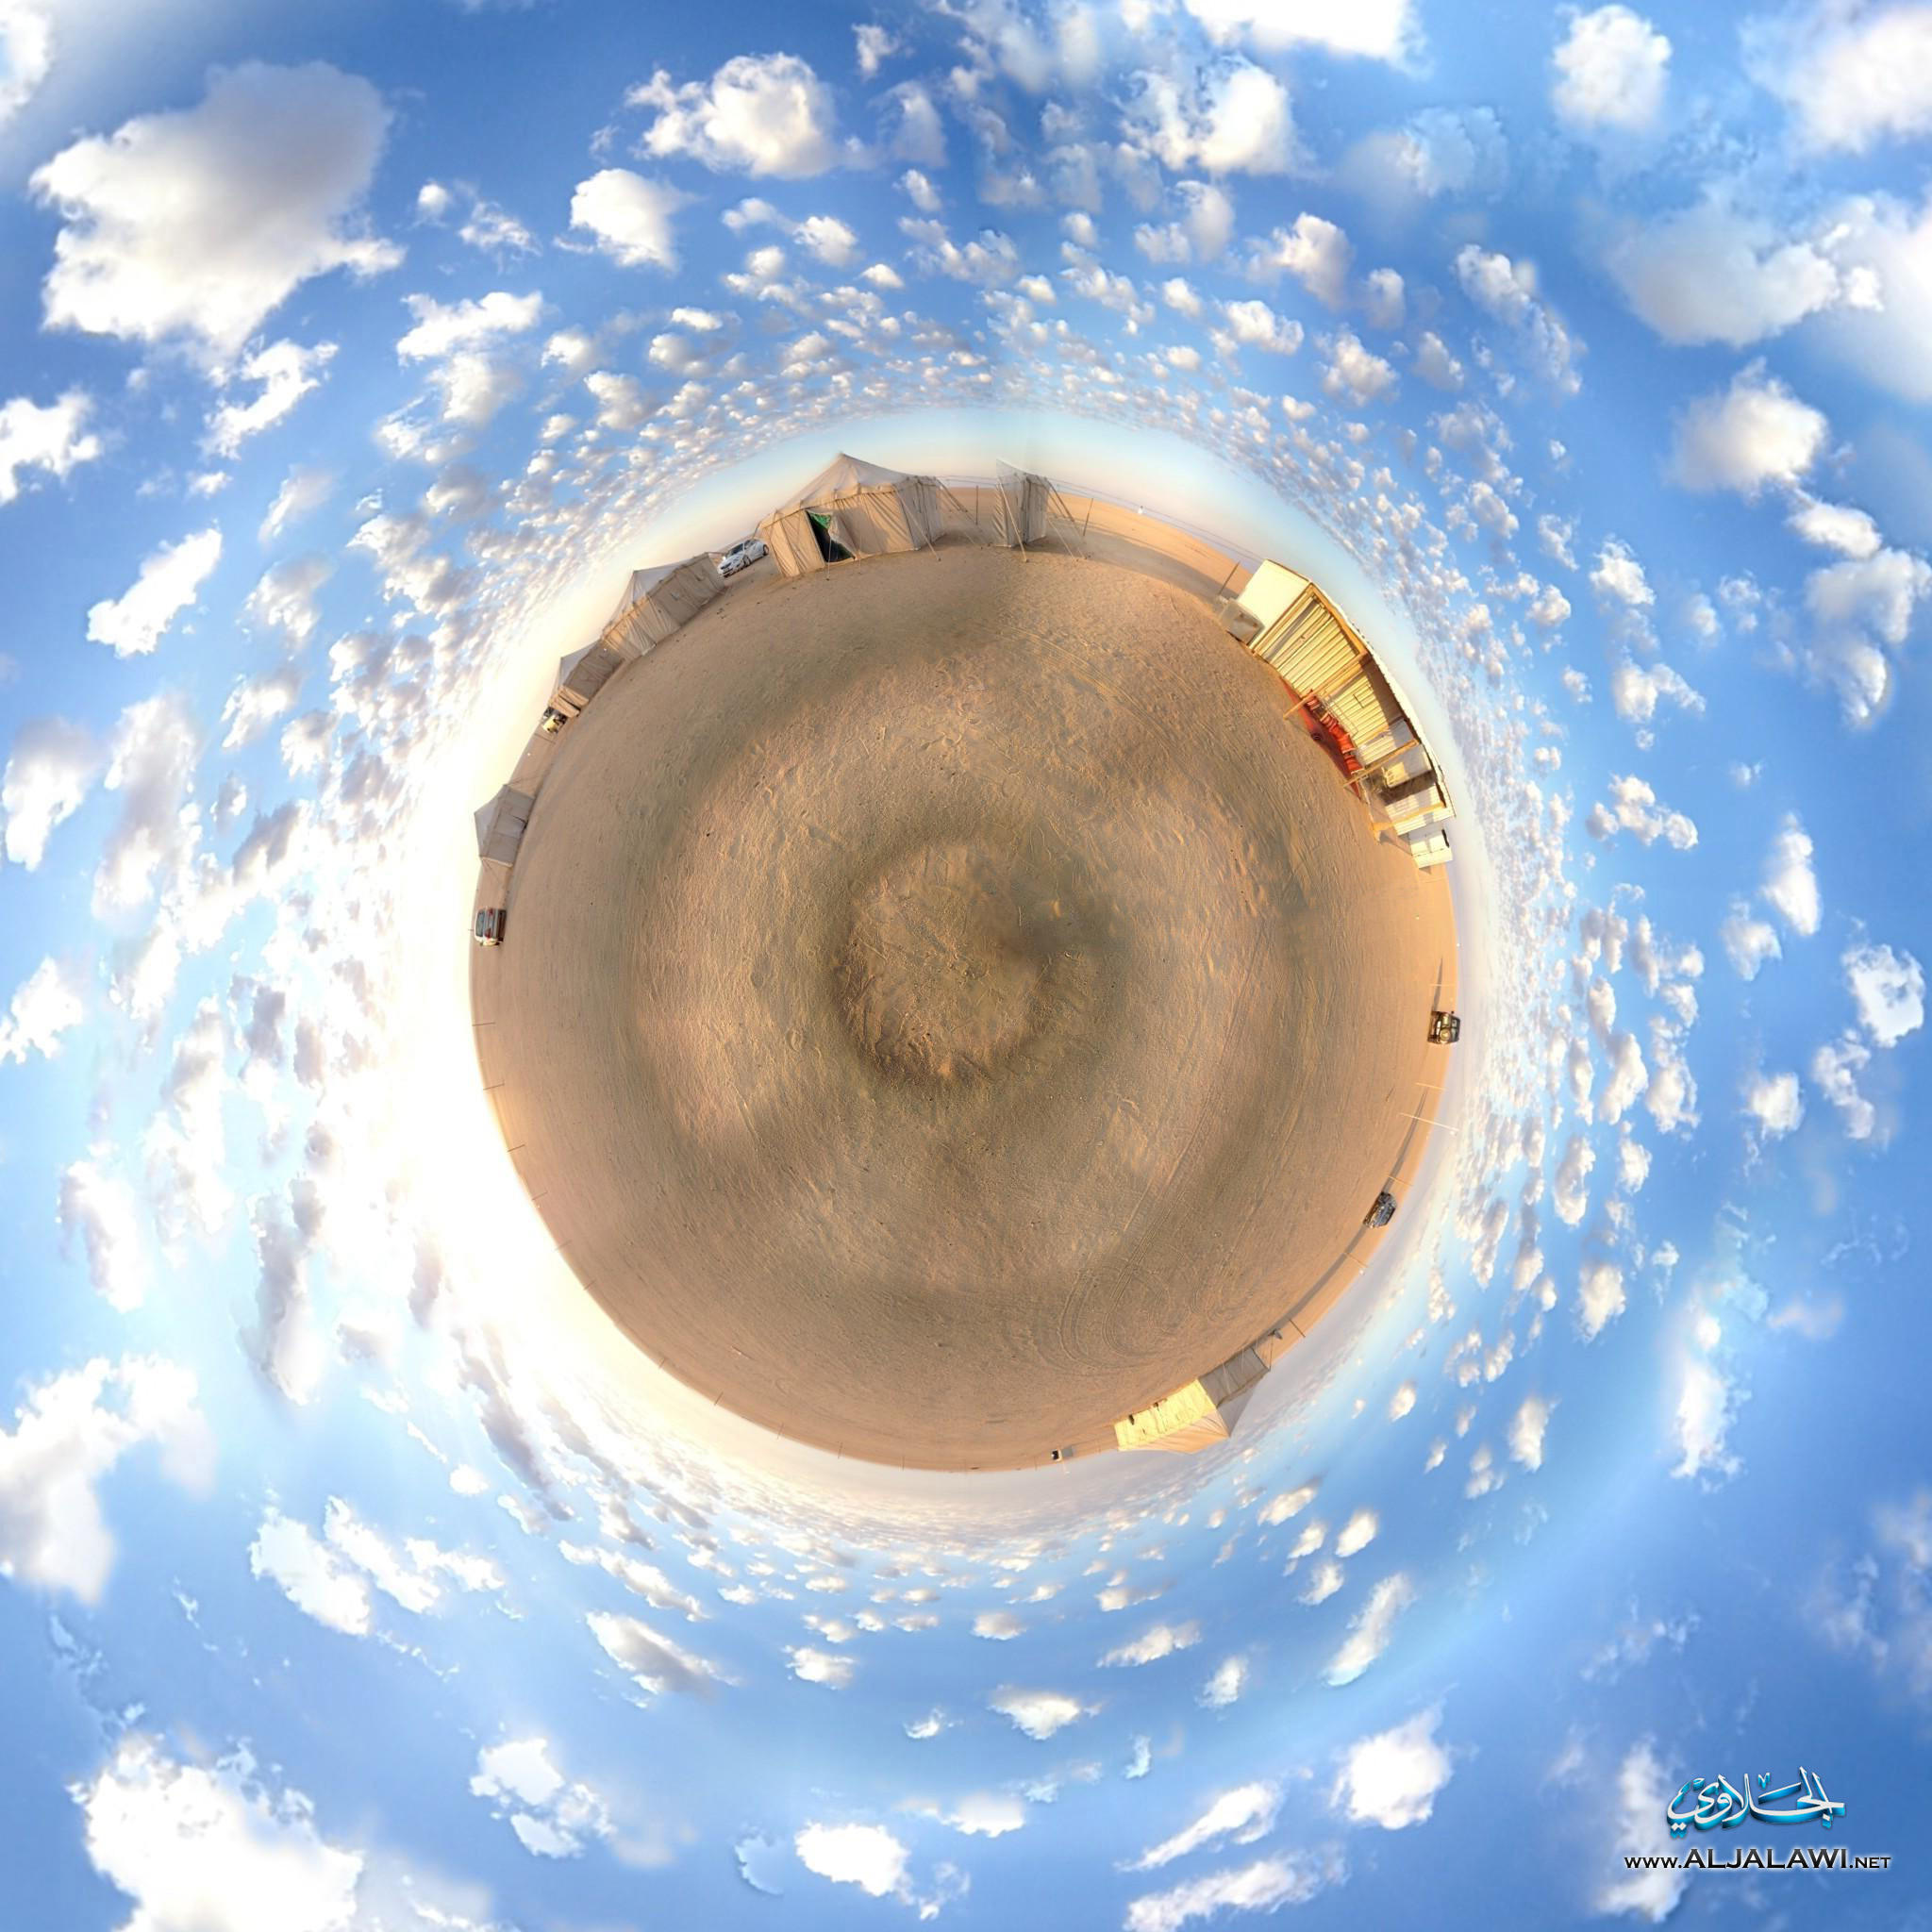 360 Panorama : عيش جو المكان بالصوره + مجموعة من تصويري